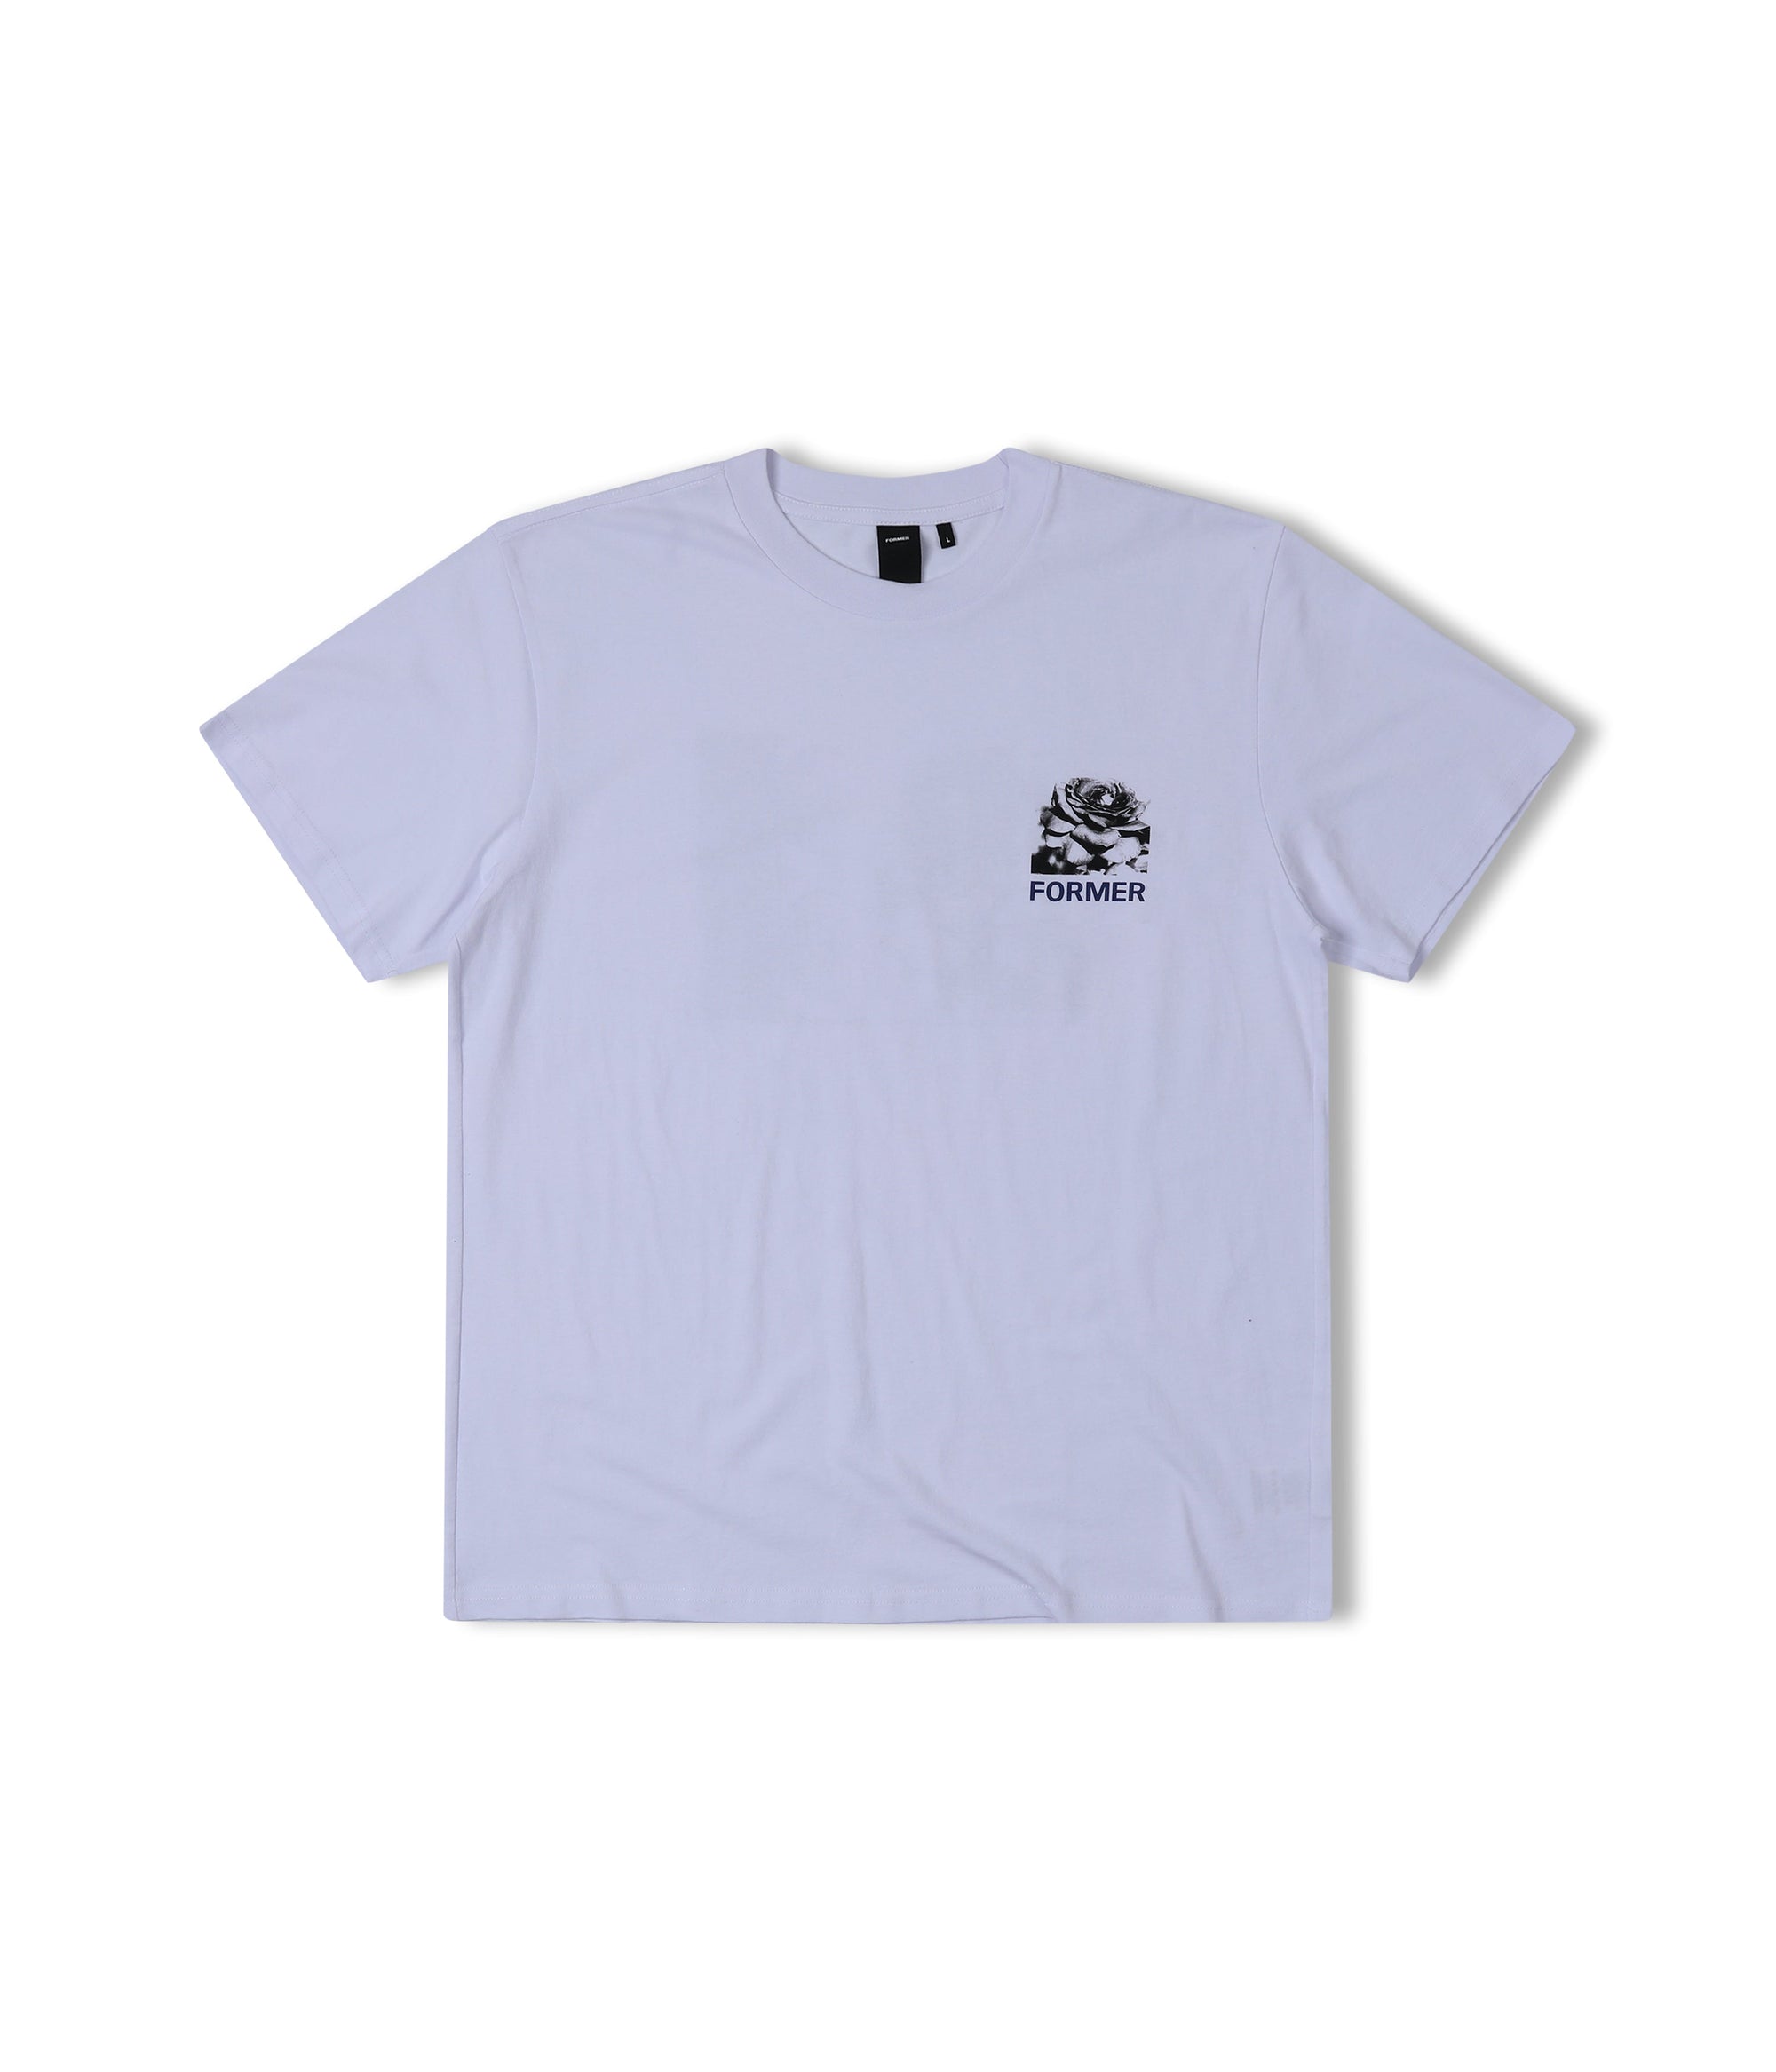 Former Merchandise - ROSE CRUX T-SHIRT - White